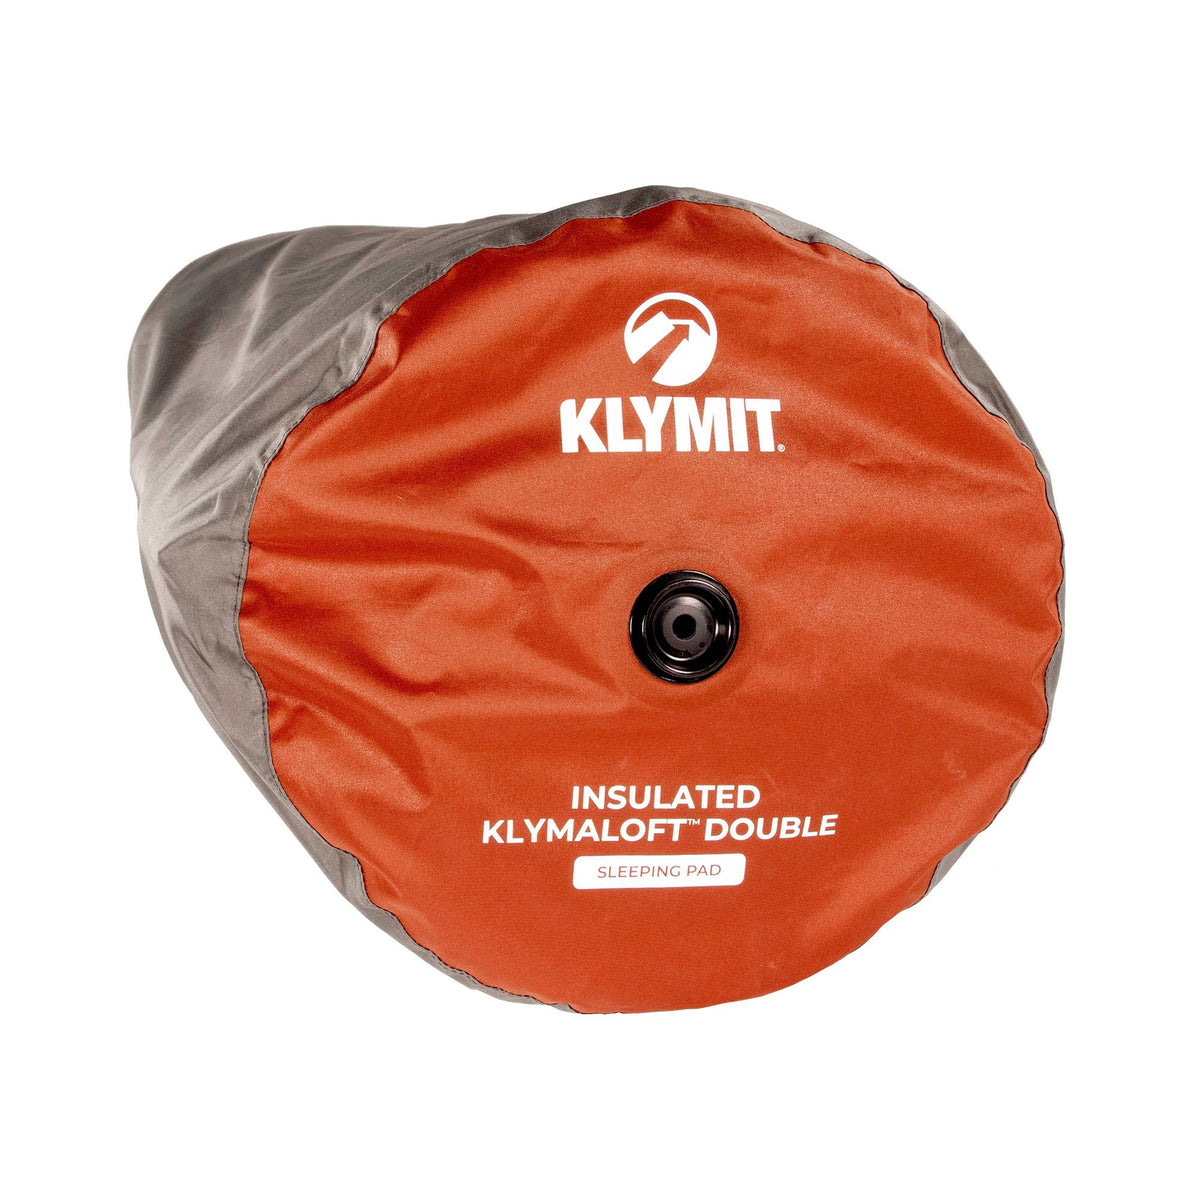 Klymit Klymaloft Double Sleeping Pad packaging